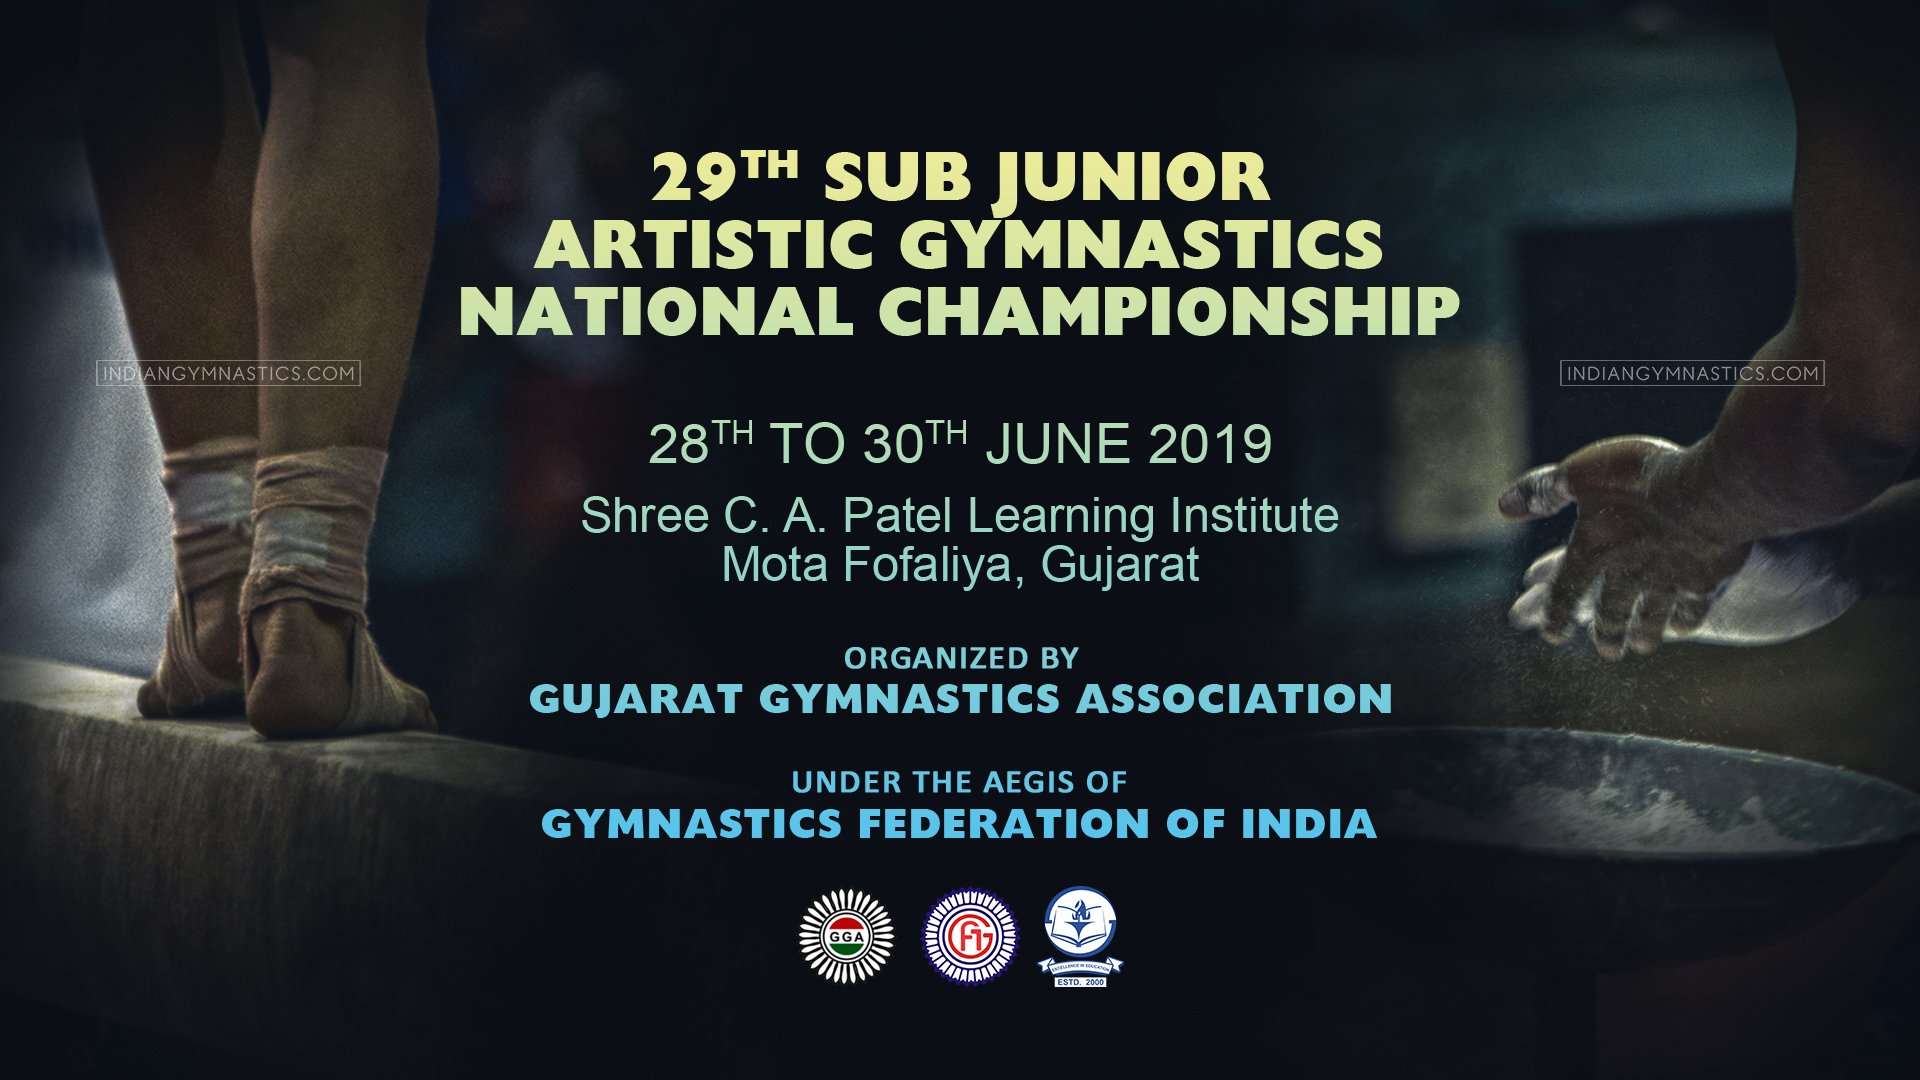 29th Sub Junior Artistic Gymnastics National Championship